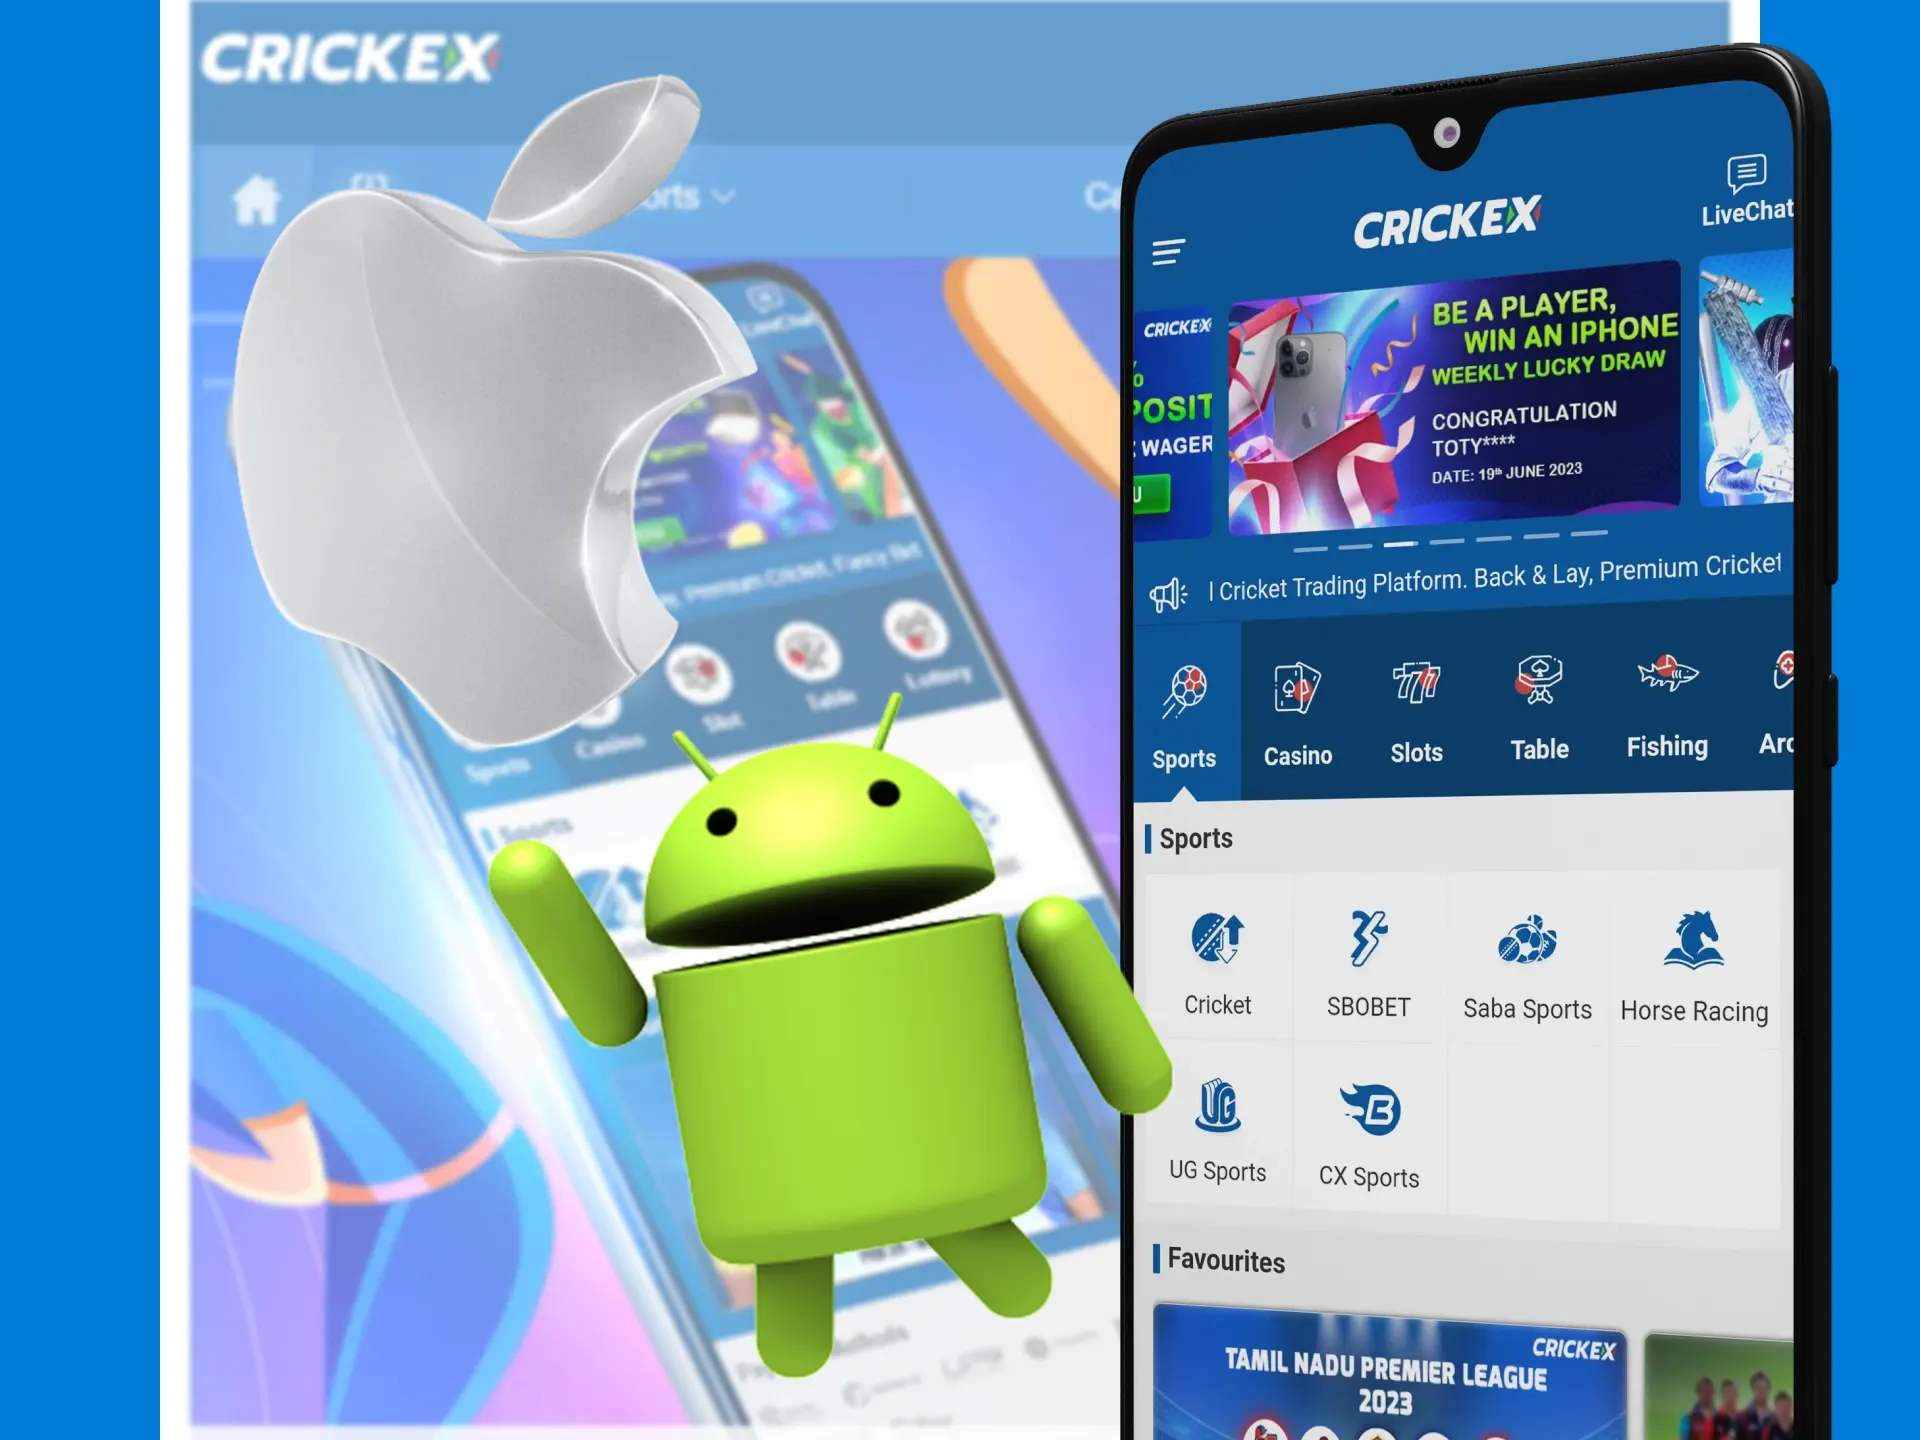 You can use Crickex through your smartphone.